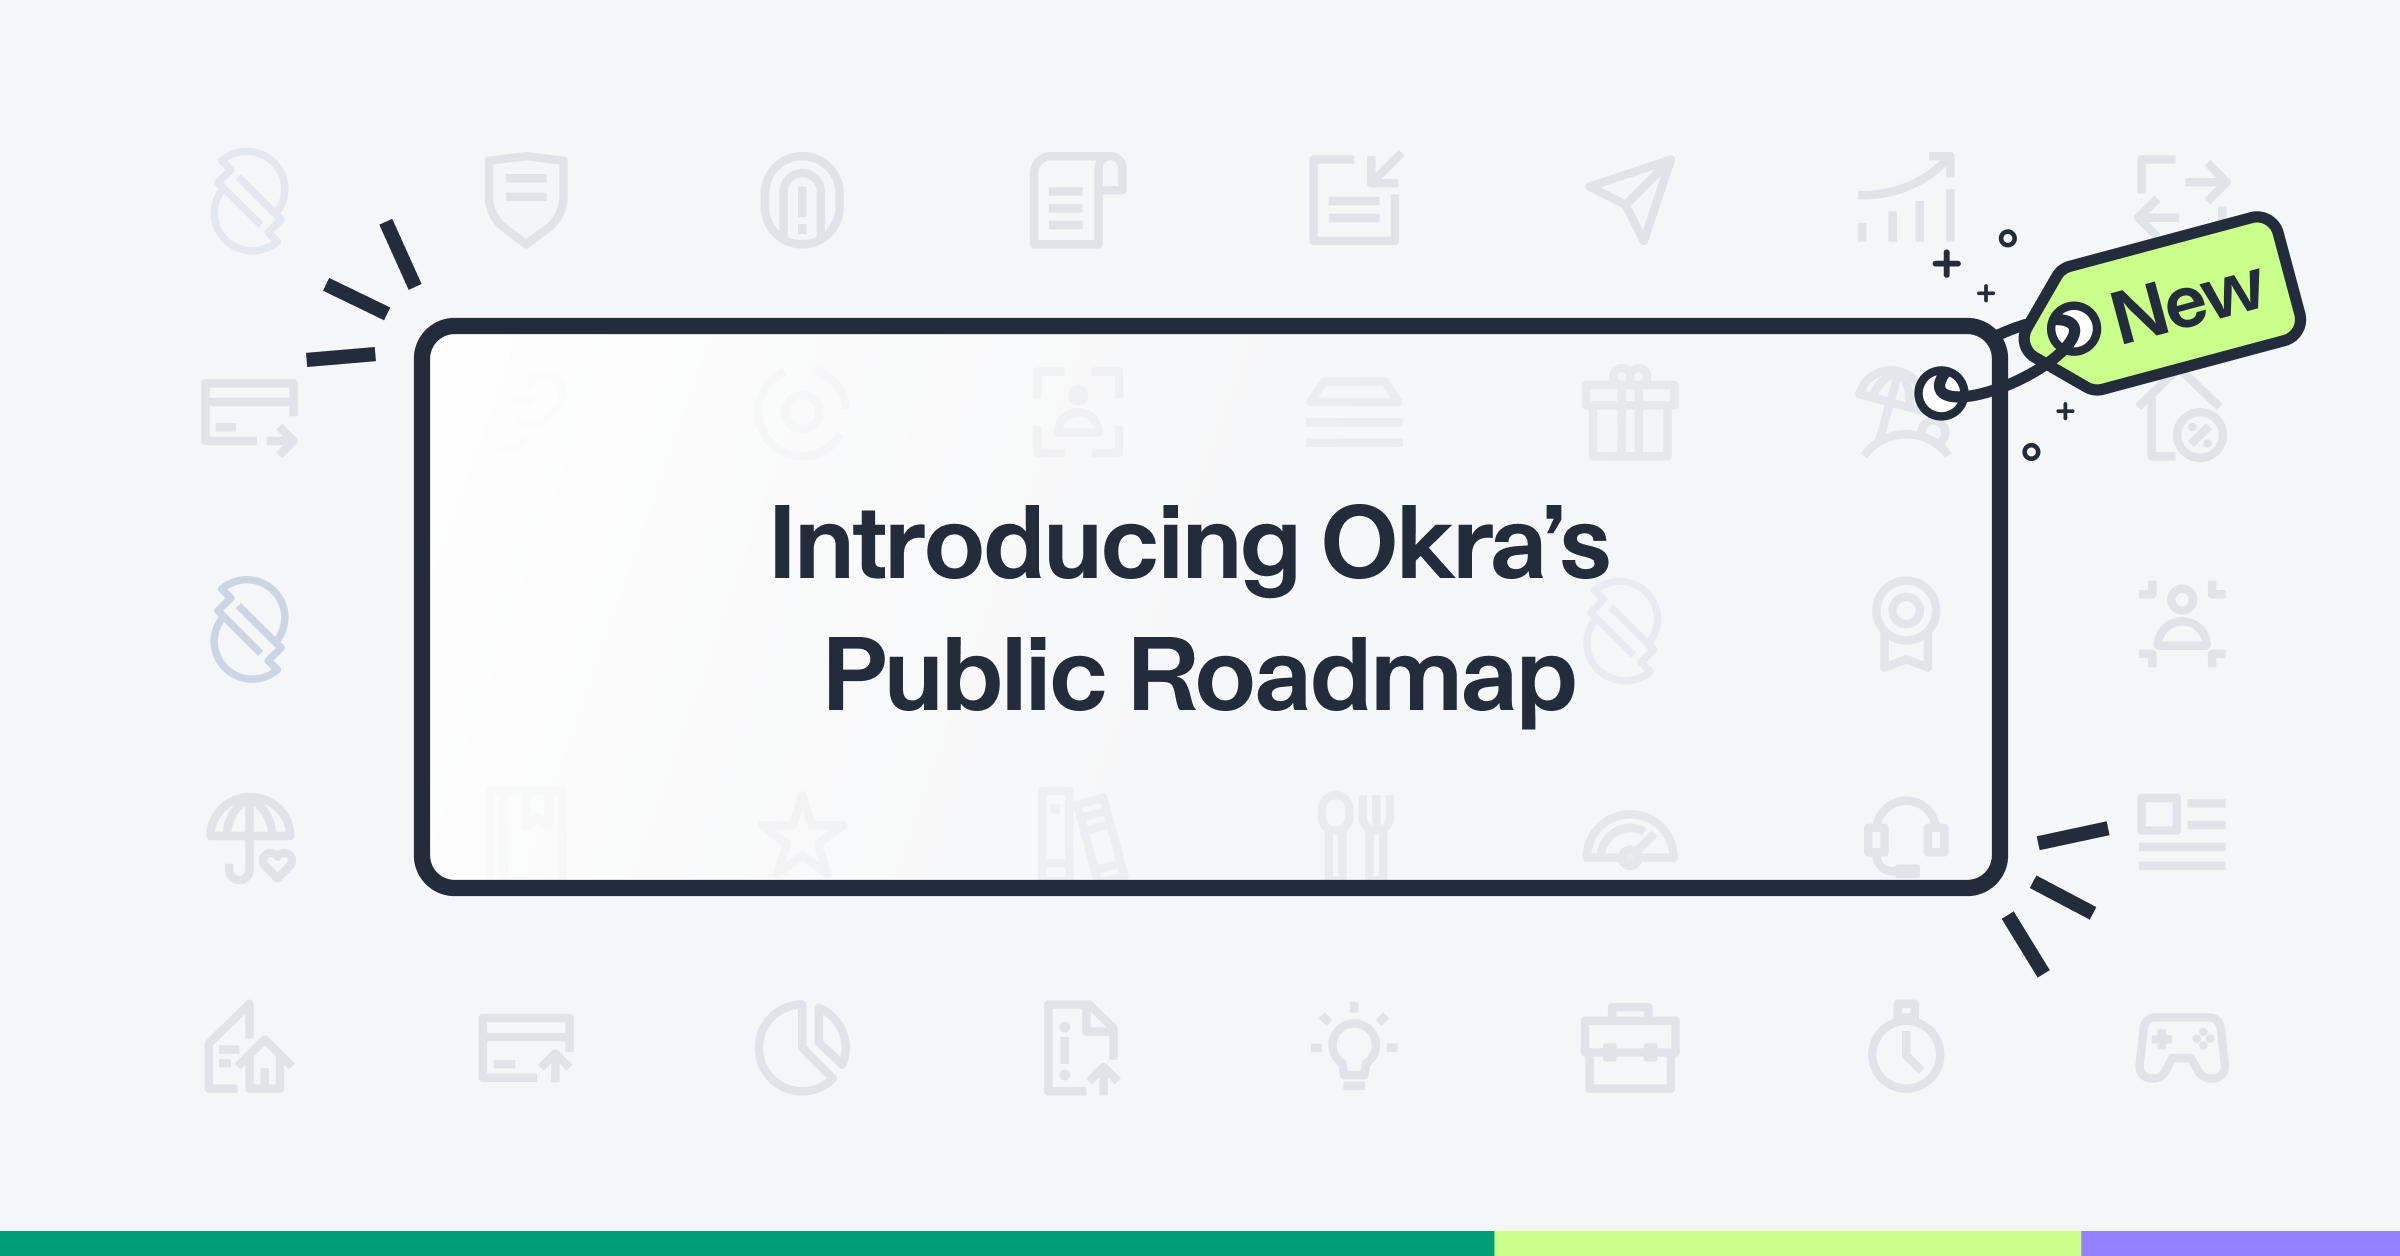 Introducing Okra's Public Roadmap